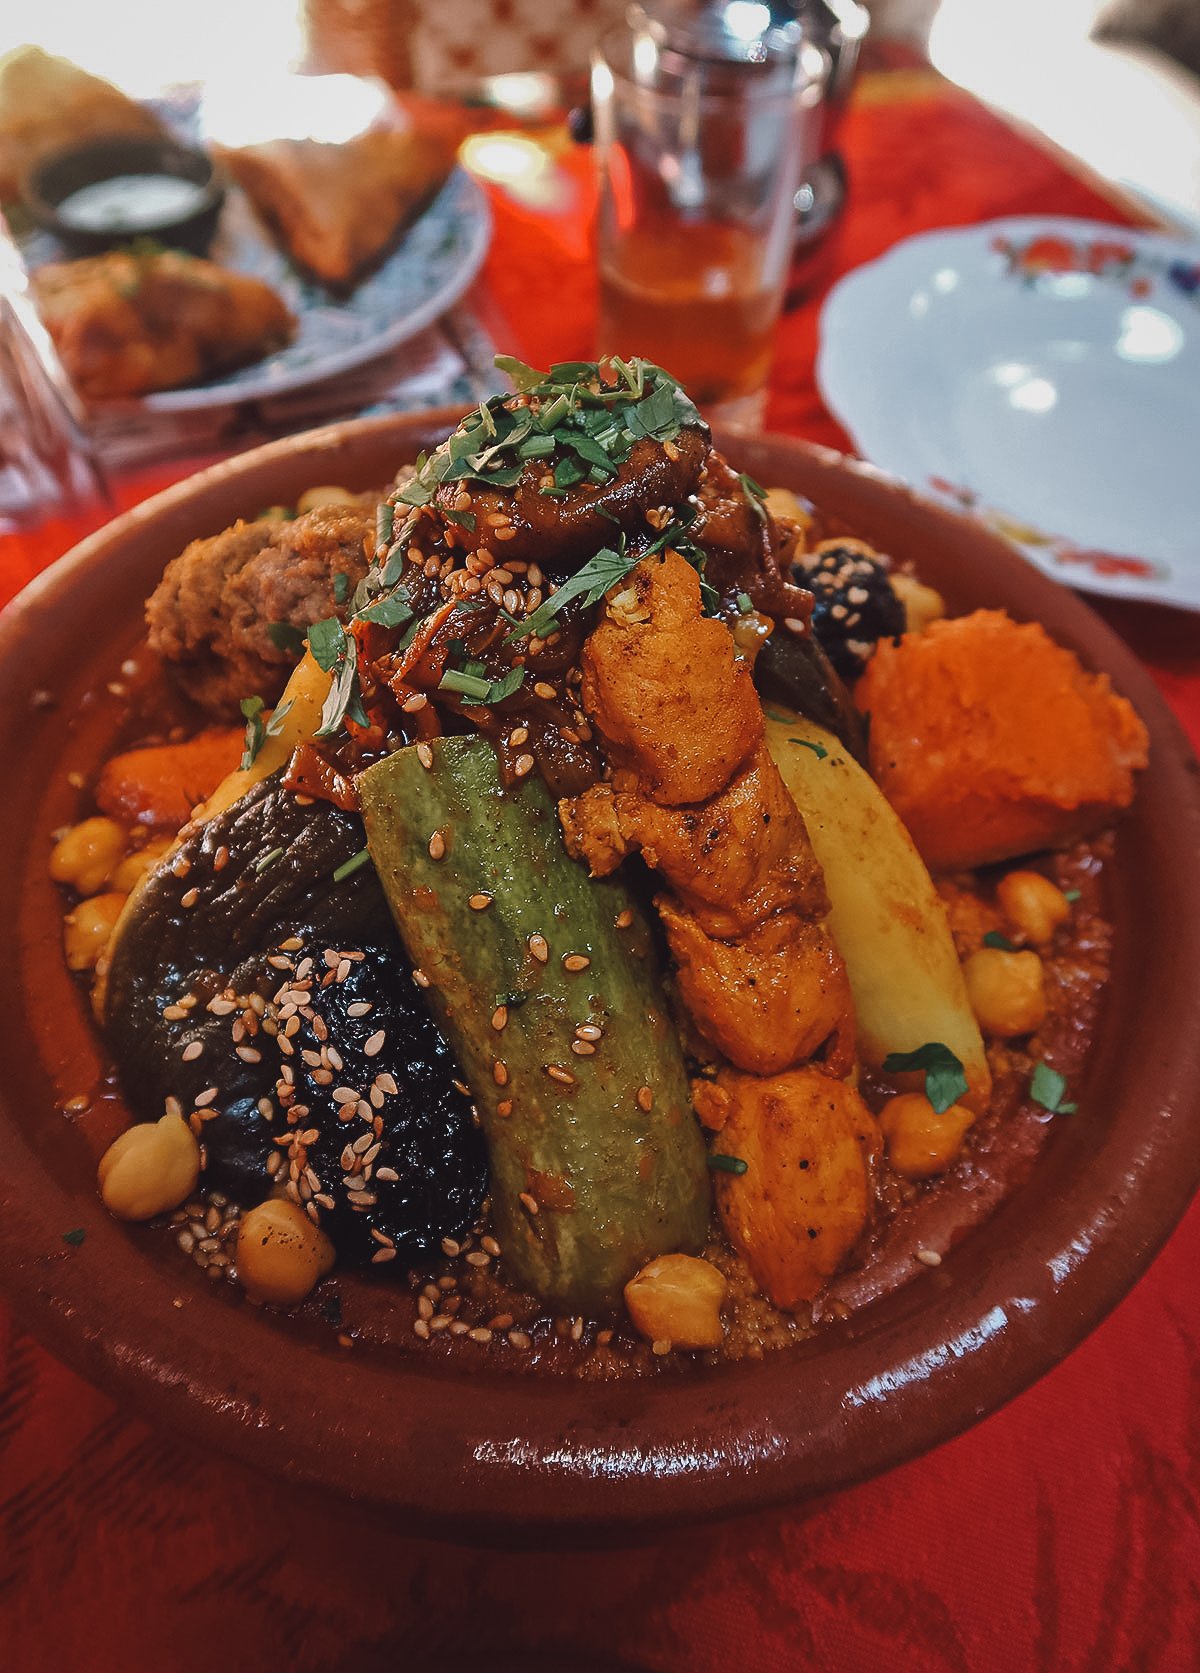 Royal couscous at a restaurant in Marrakech